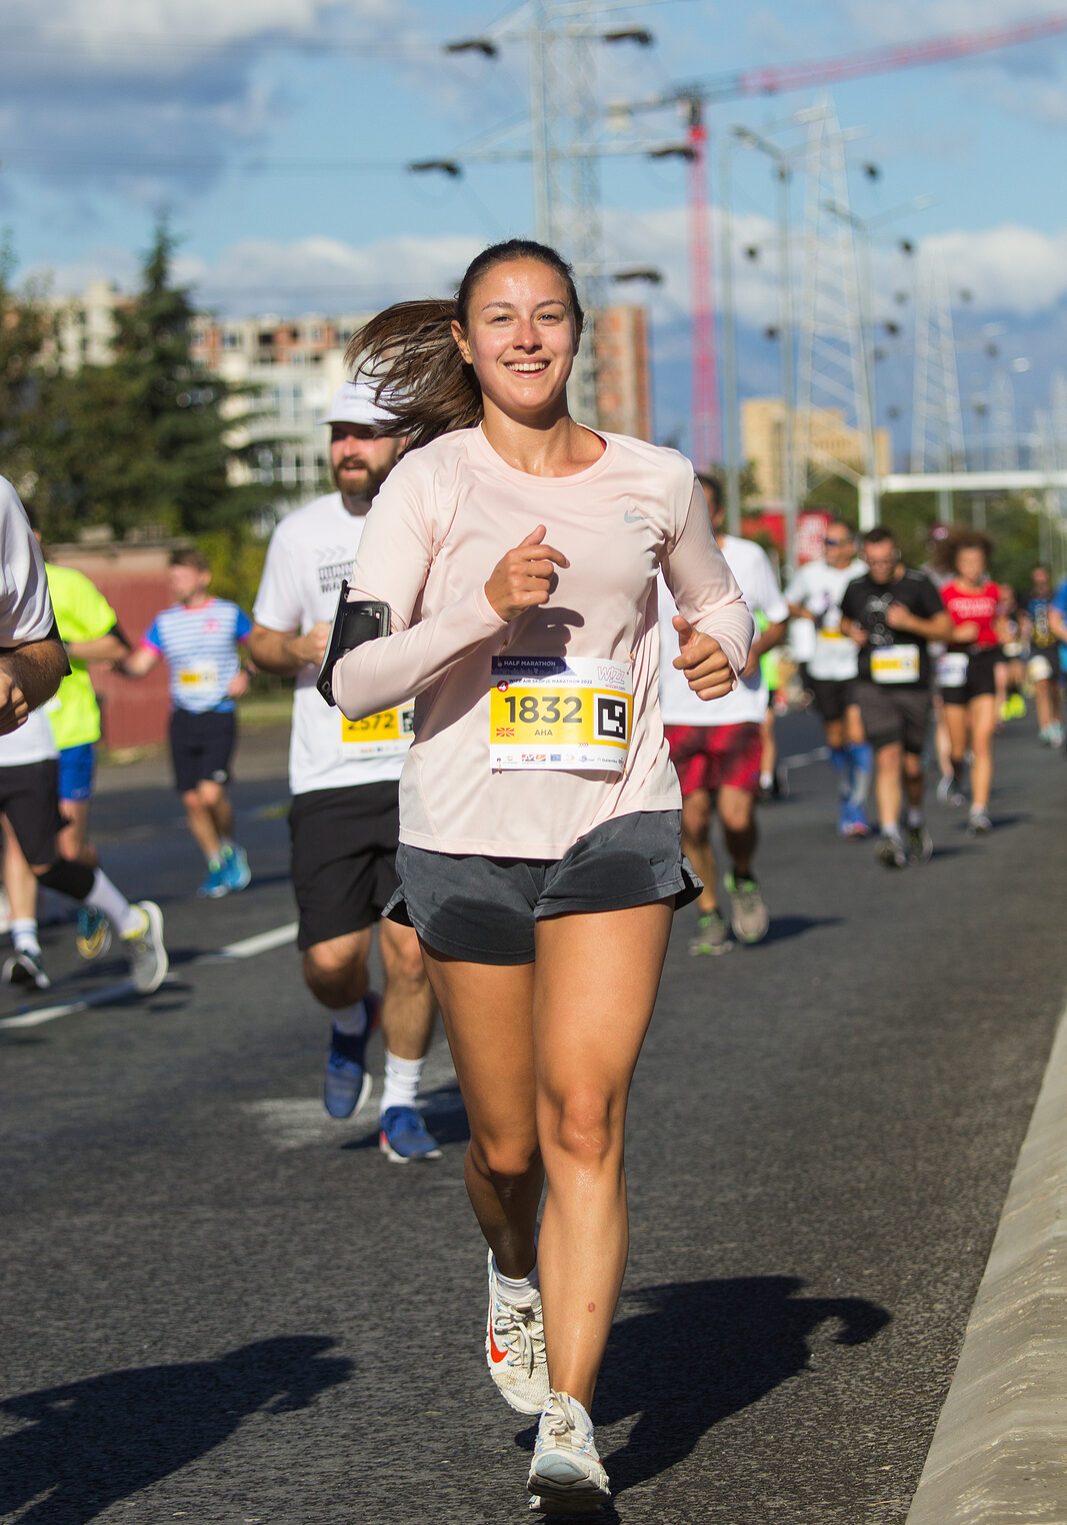 SKOPJE - OCTOBER, 02: Over 8,500 Registered Runners Participate in the Skopje Marathon on October 02, 2022 in Skopje, Macedonia.